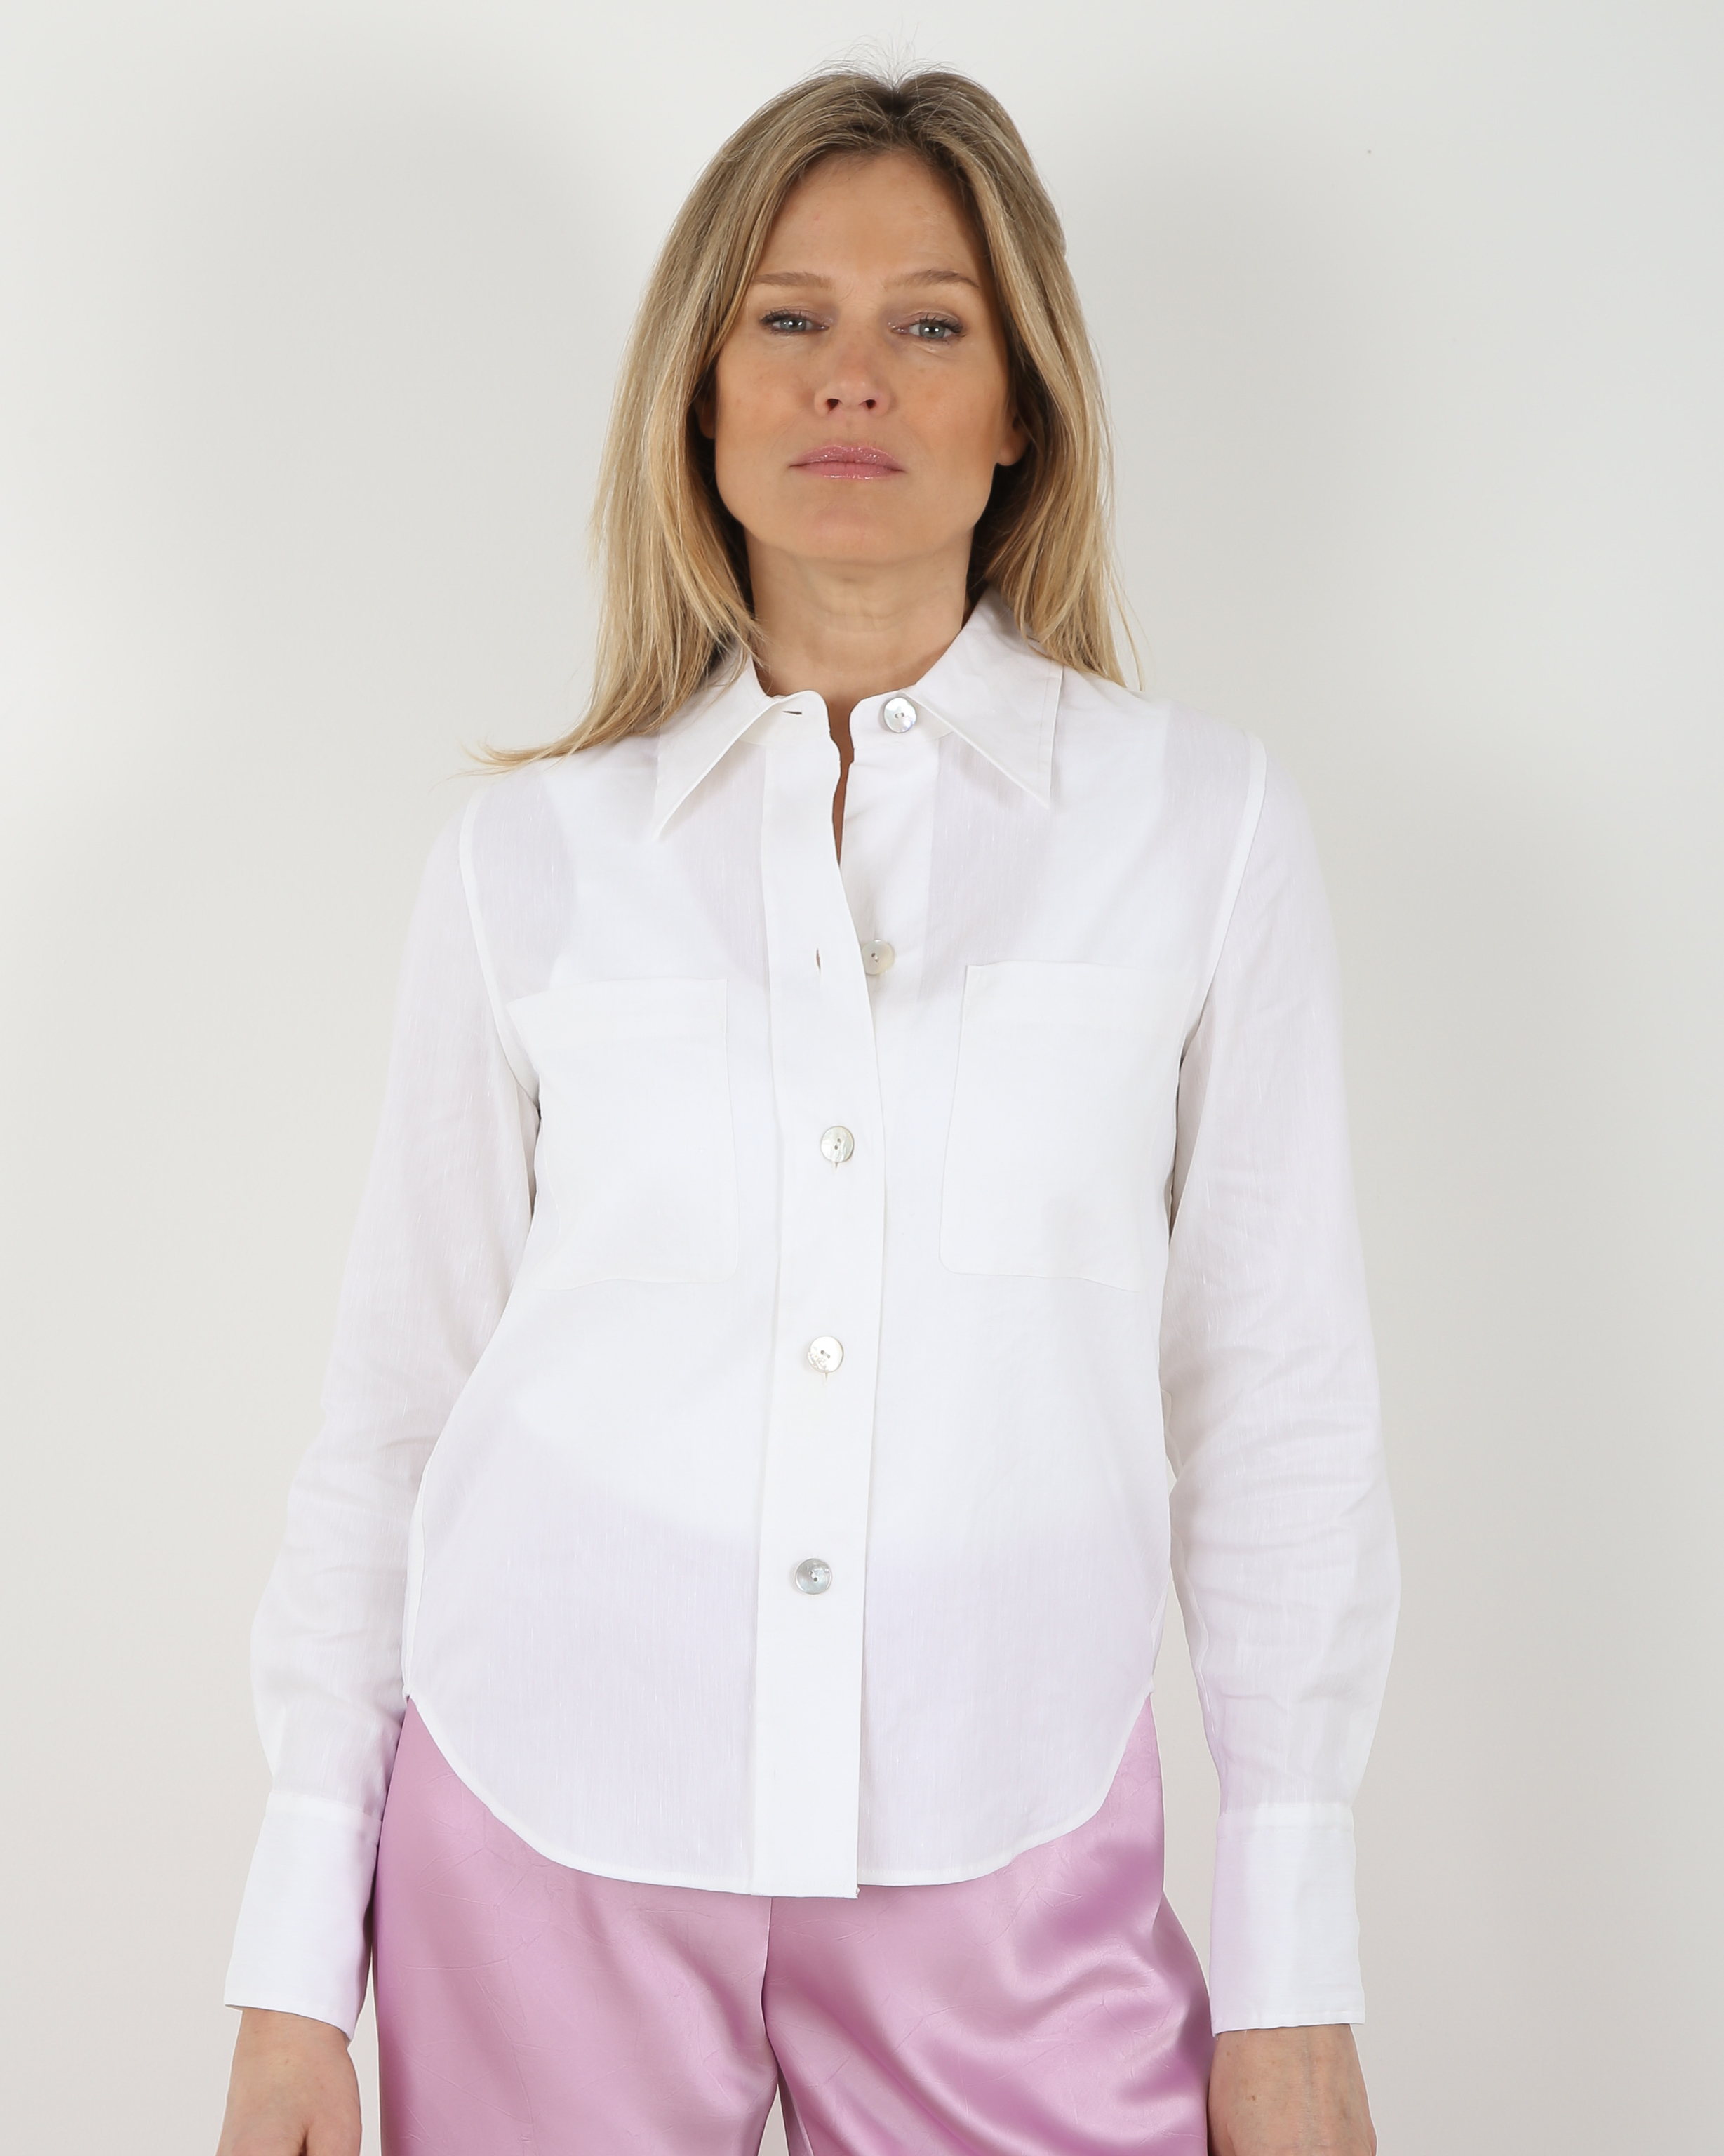 Afgeschaft Versnel Verstrooien Linnen blouse off white